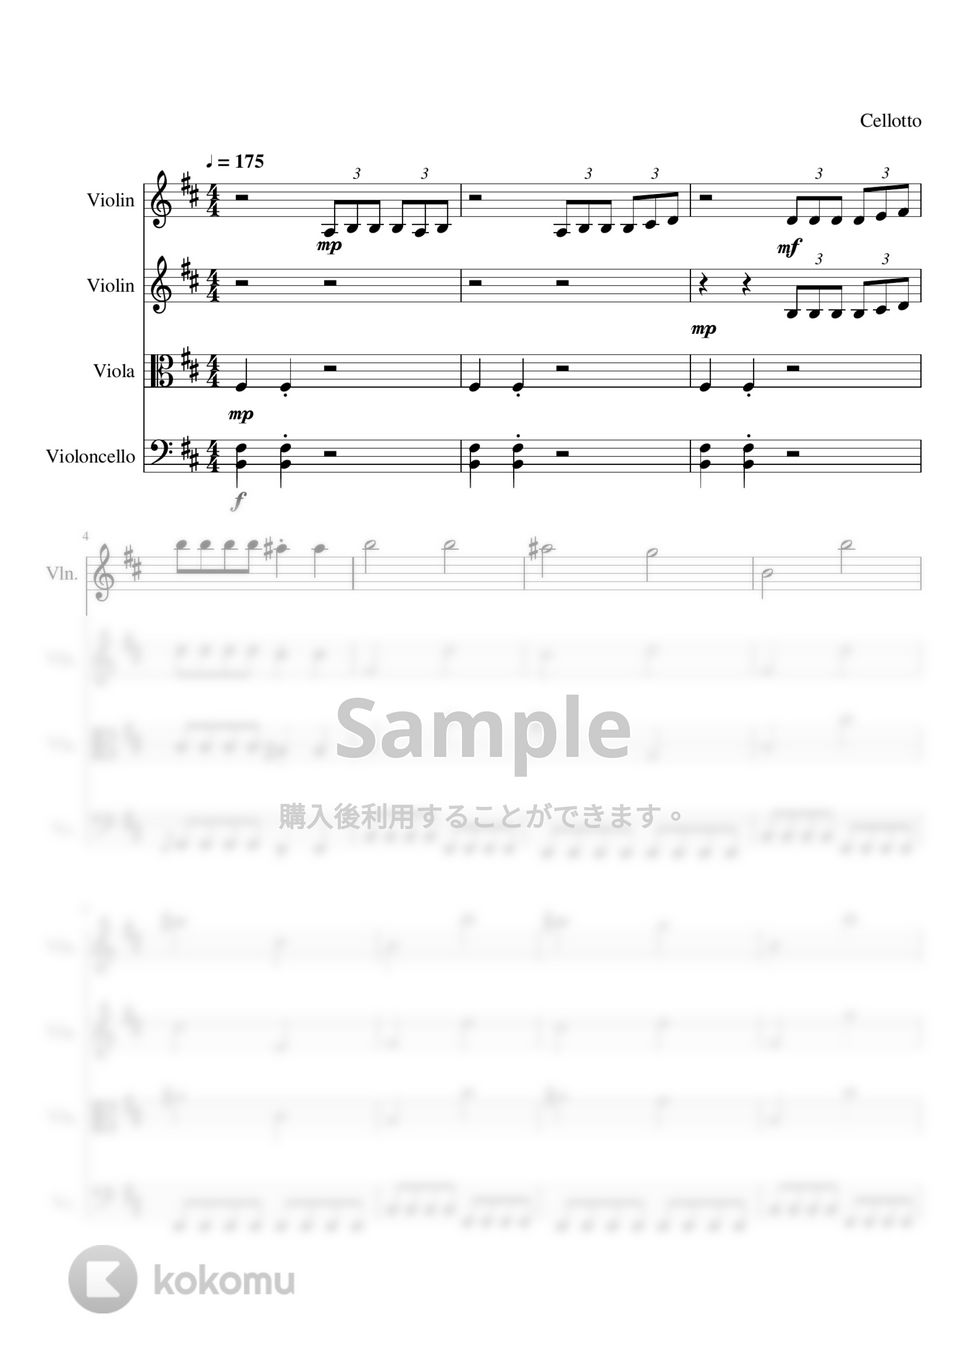 Ado - うっせぇわ (弦楽四重奏) by Cellotto